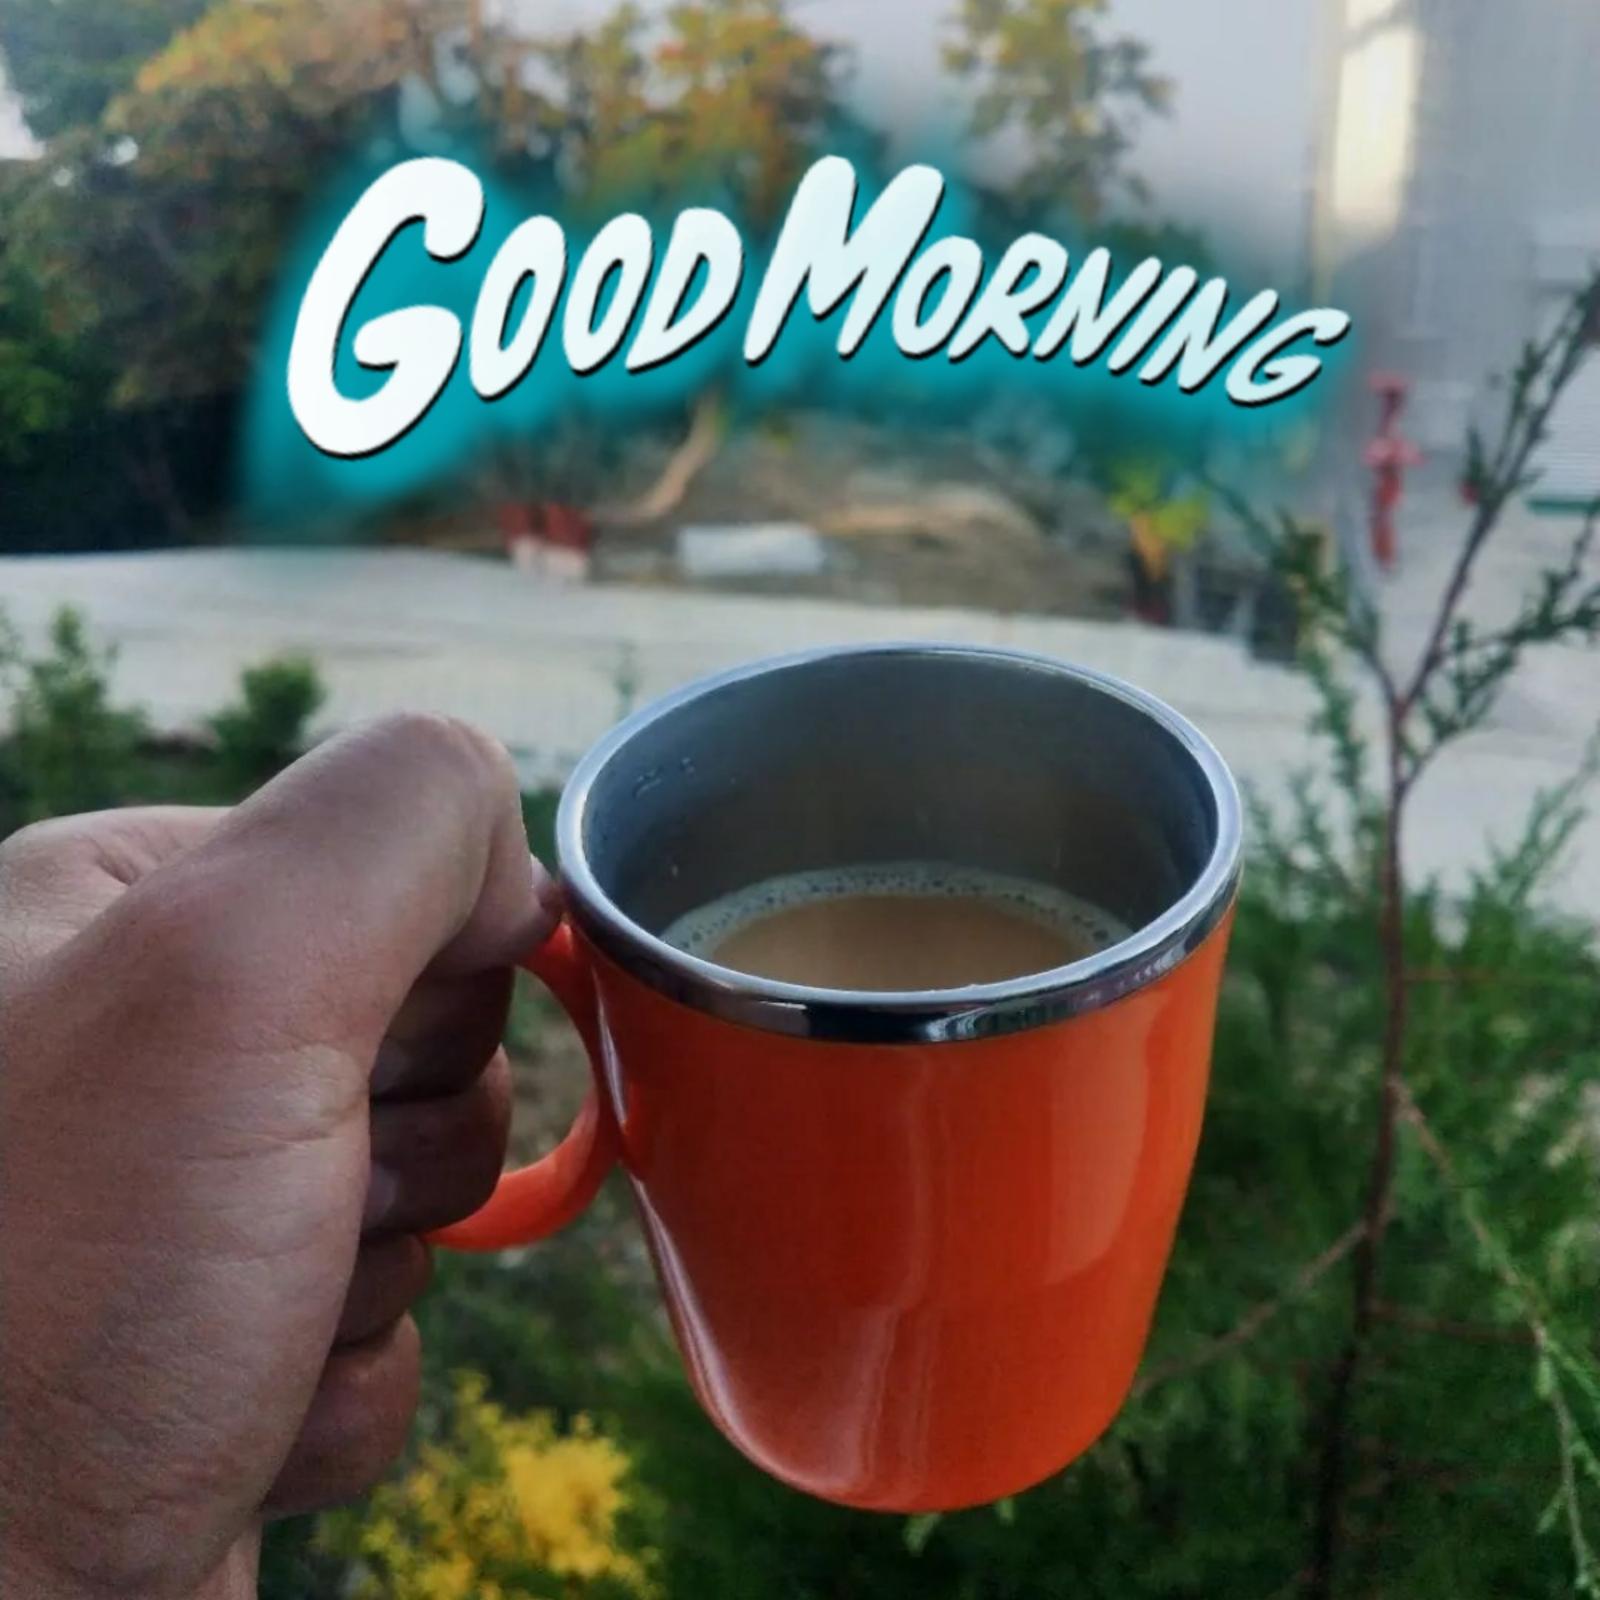 Good Morning Tea Images Download